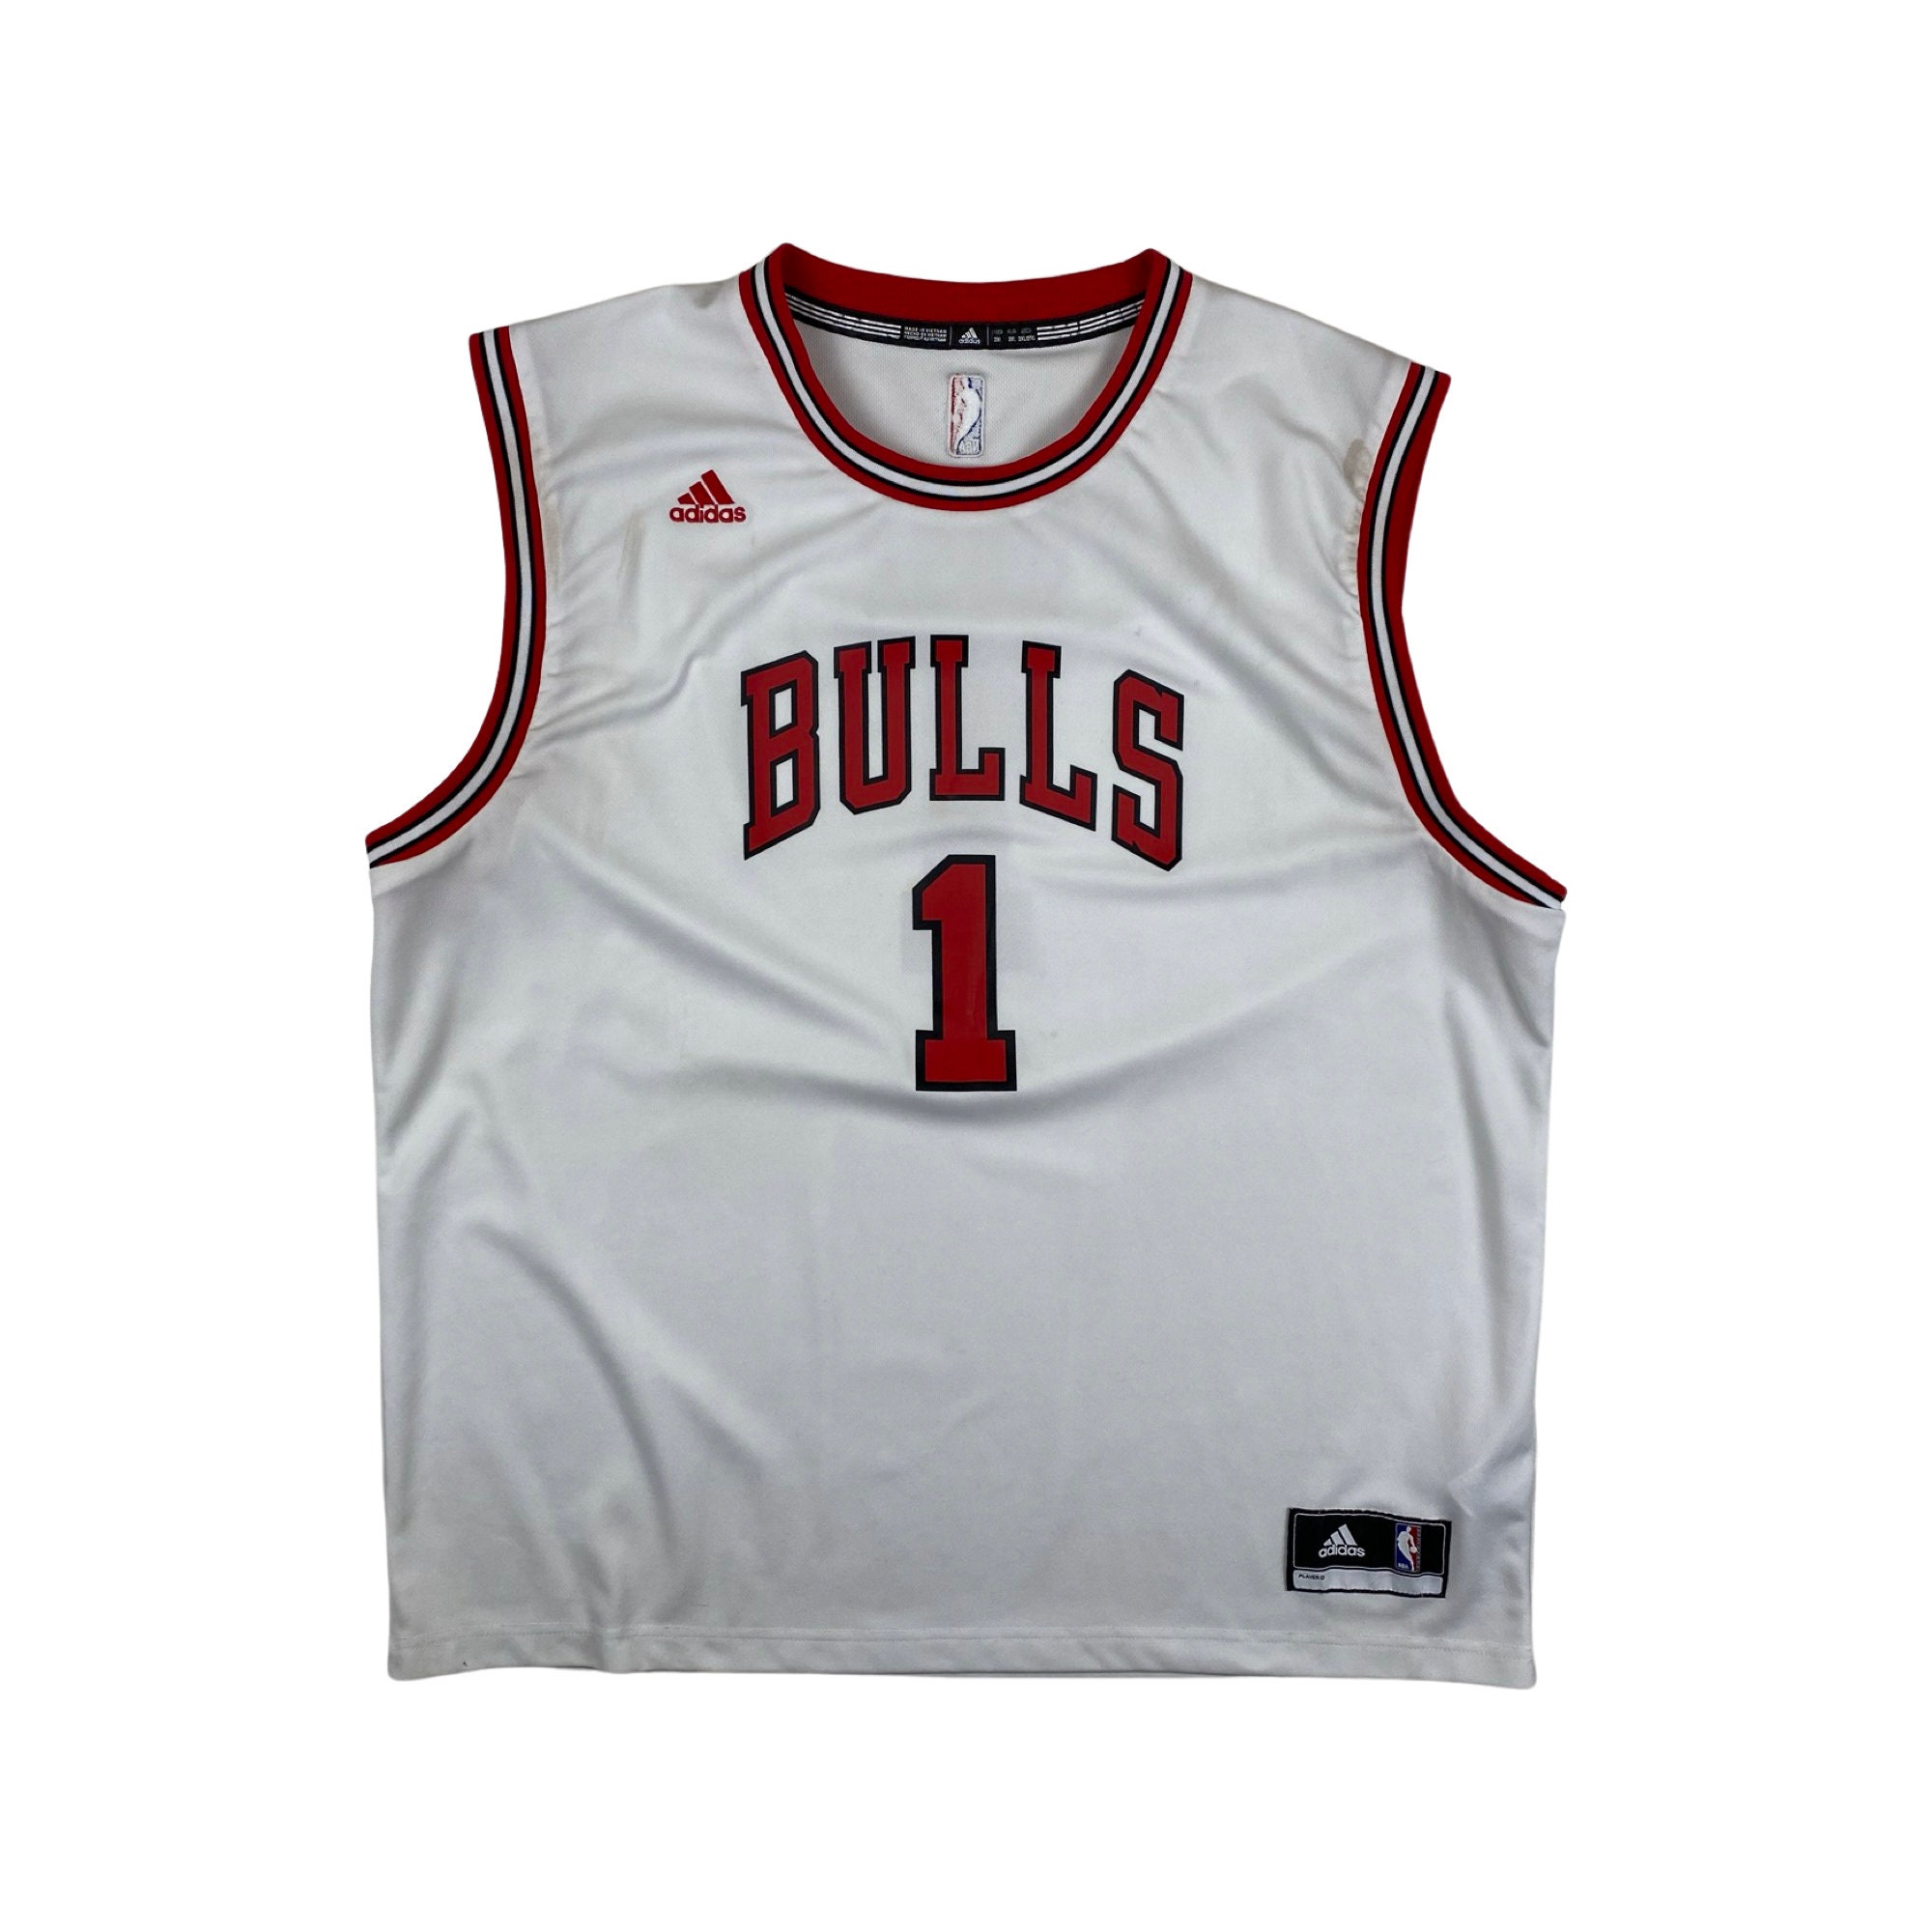 bulls jersey - España